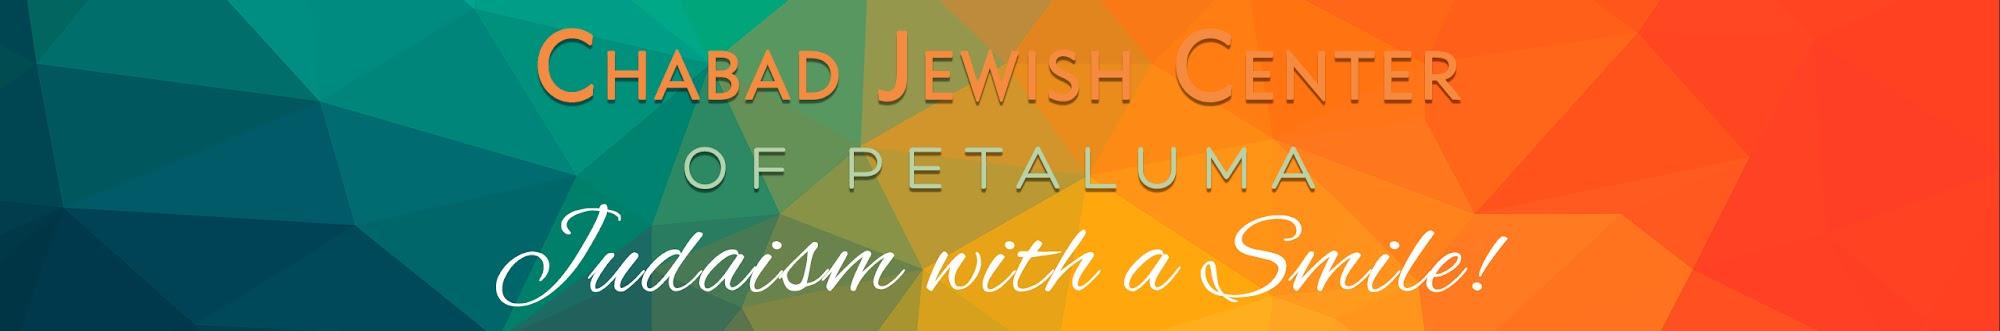 Chabad Jewish Center of Petaluma